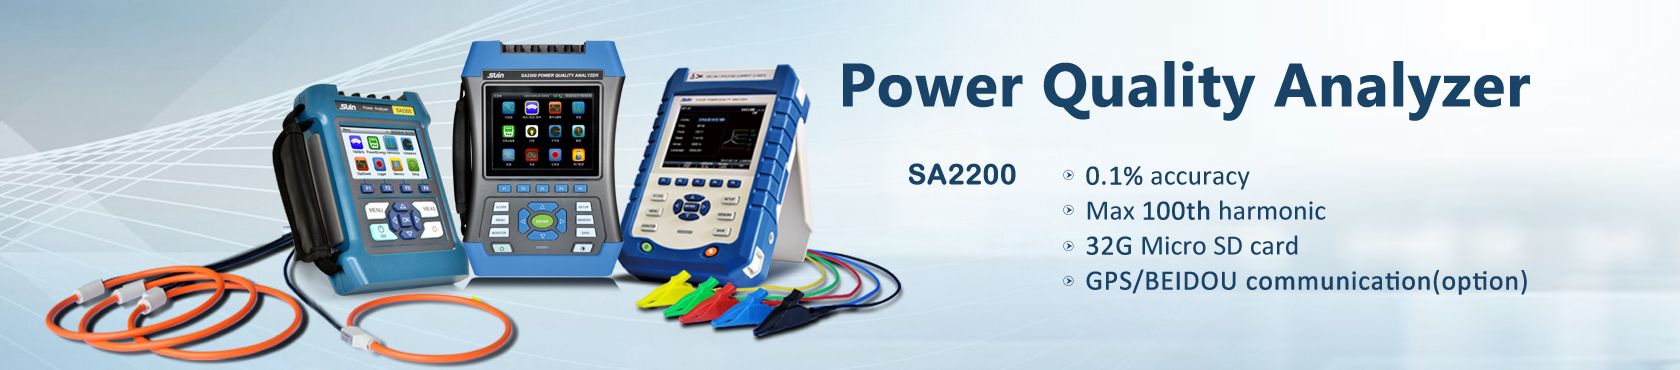 SA2200 Portable Power Analyzer